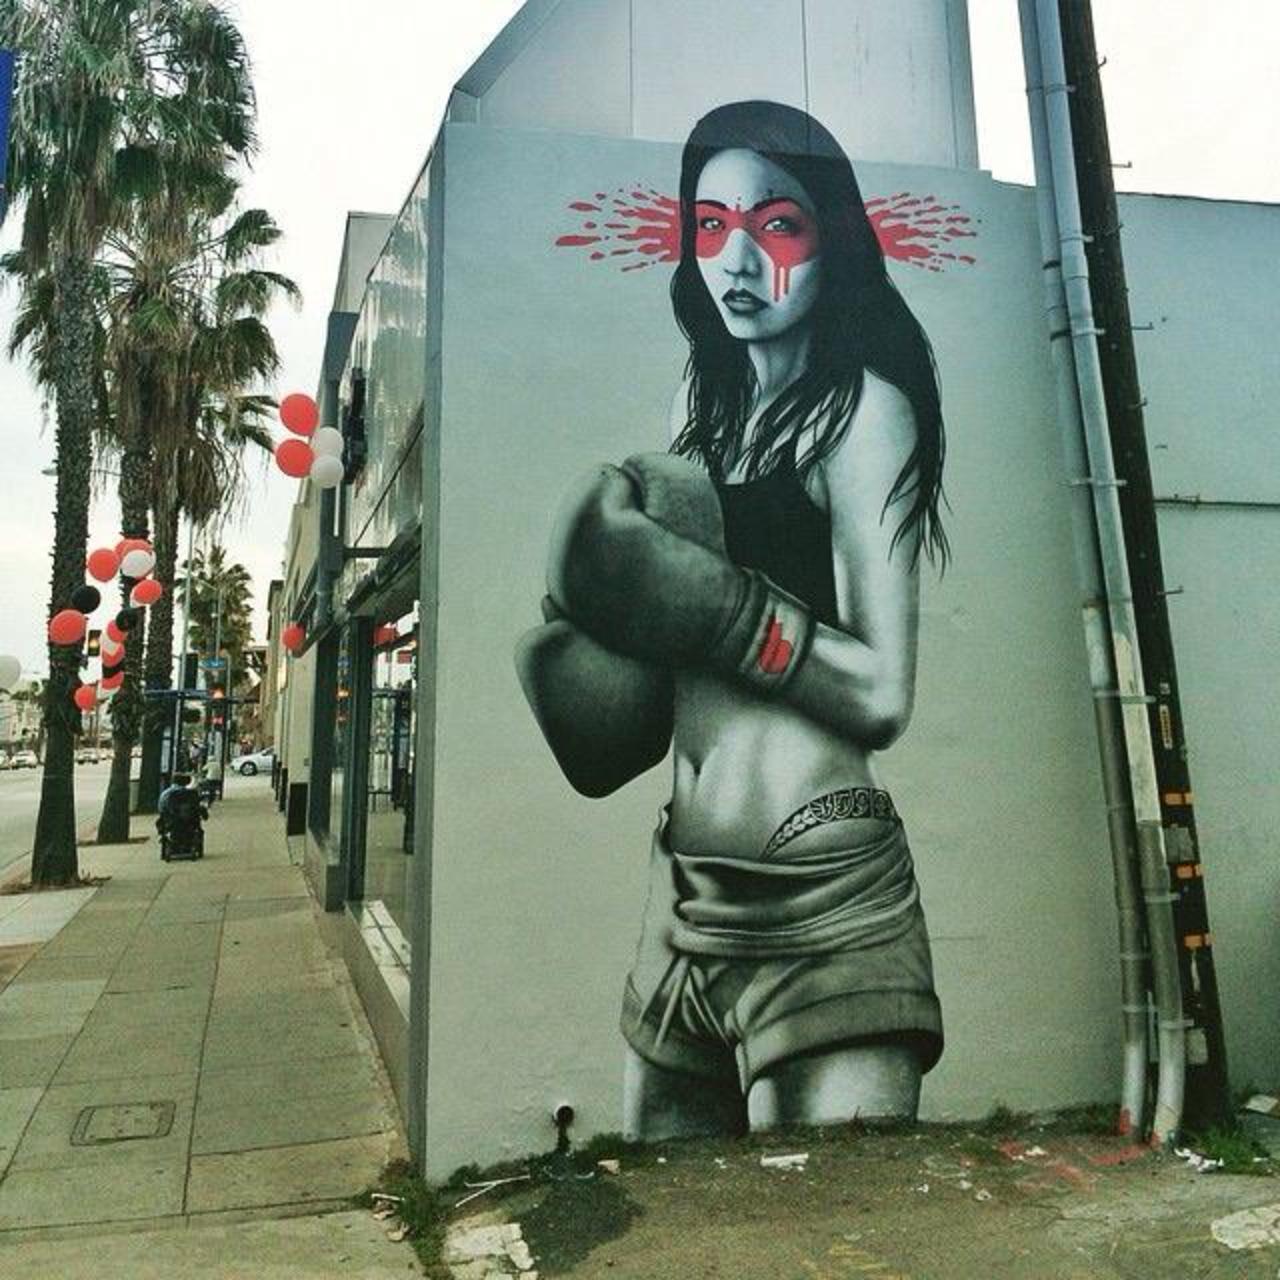 New Street Art by the artist FinDac in Santa Monica, CA 

#art #arte #graffiti #streetart http://t.co/LzsbZcvdtI